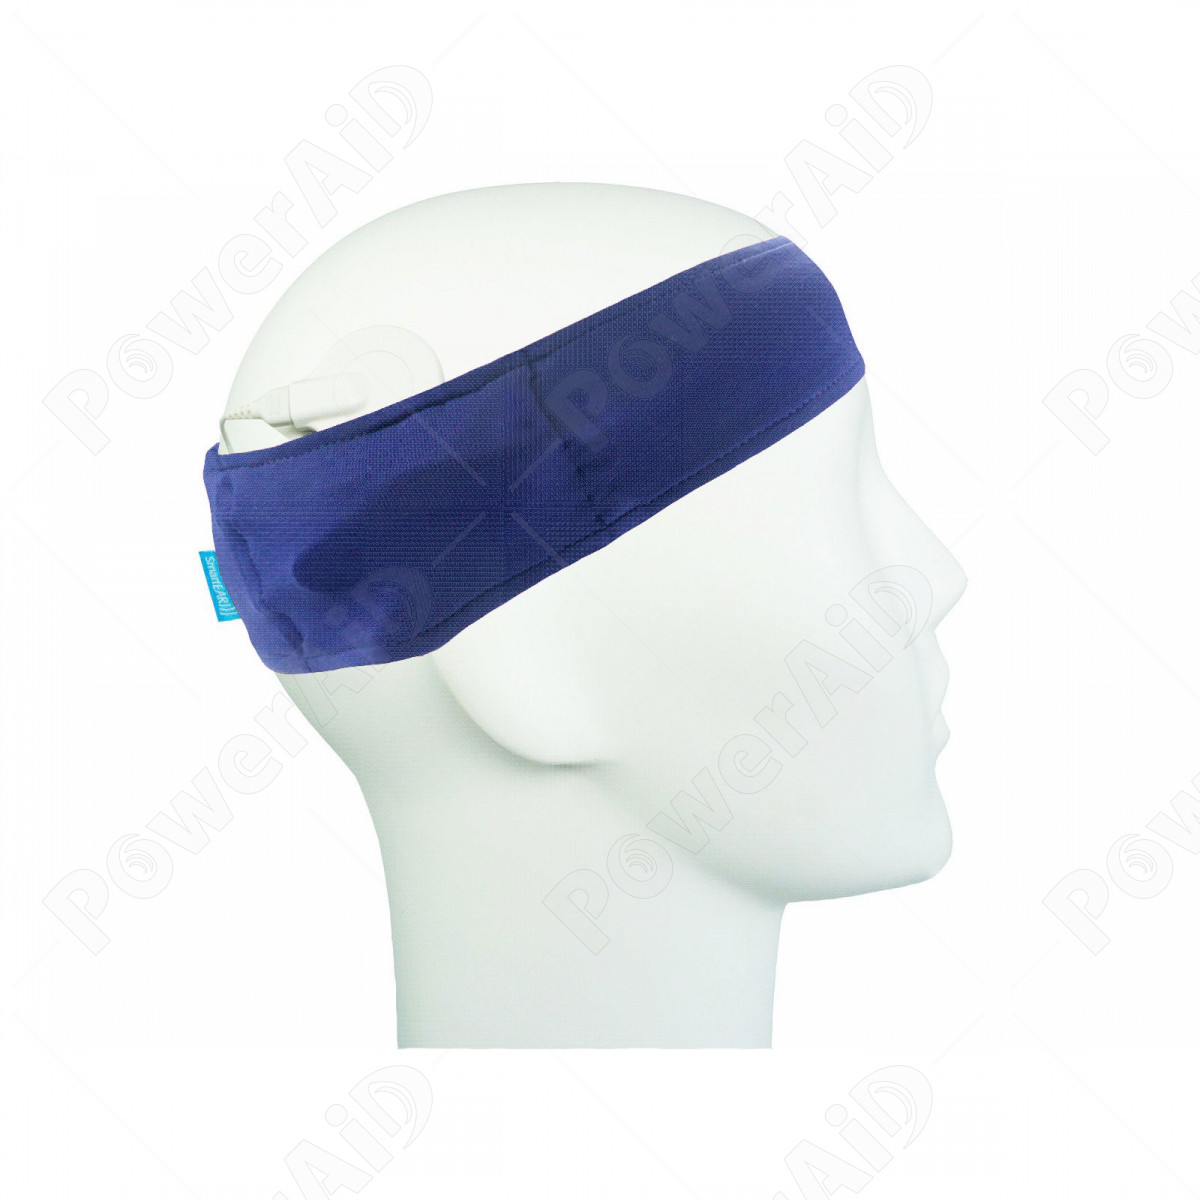 SmartEAR - Fascia sportiva per apparecchi acustici Colore: Blu - L